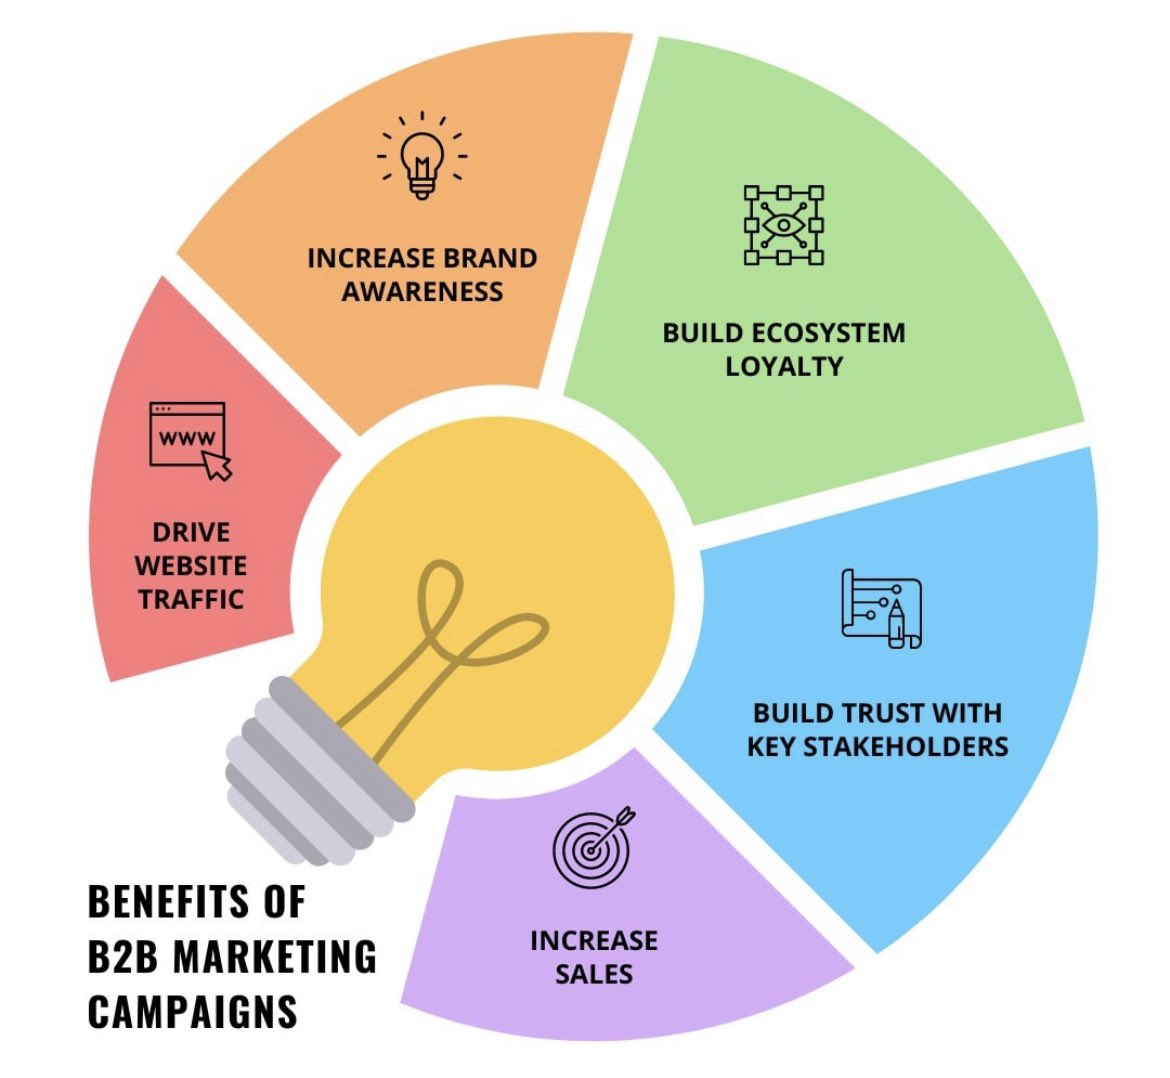 More blogs/insights 👉 our website!

#b2cmarketing #b2bmarketing #strategy #mktg #digitalmarketing #marketingstrategy #mobilemarketing #socialmediamarketing #promotion #adwords #mktdigital #repost